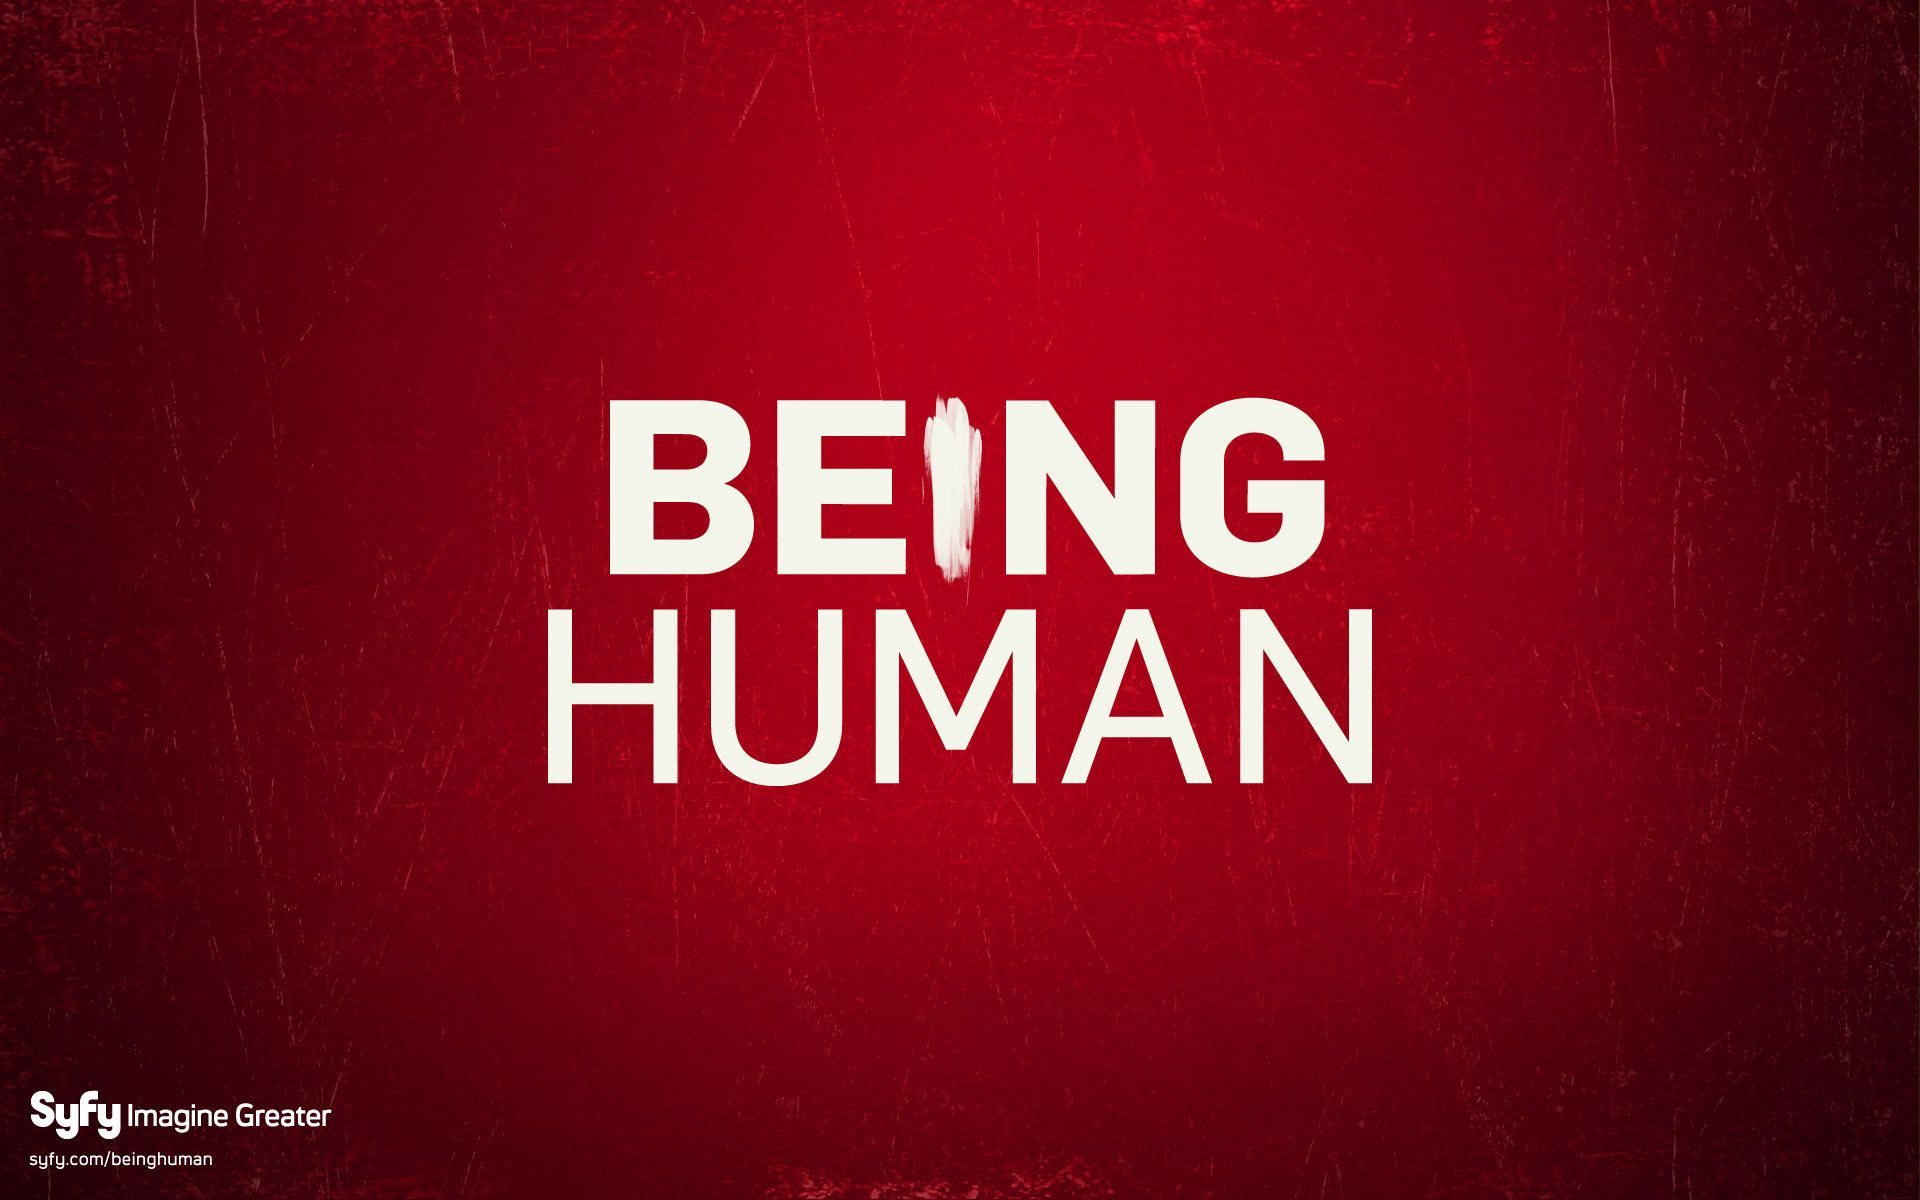 Being Human (U.S) Wallpaper: Being Human Wallpaper. Being human